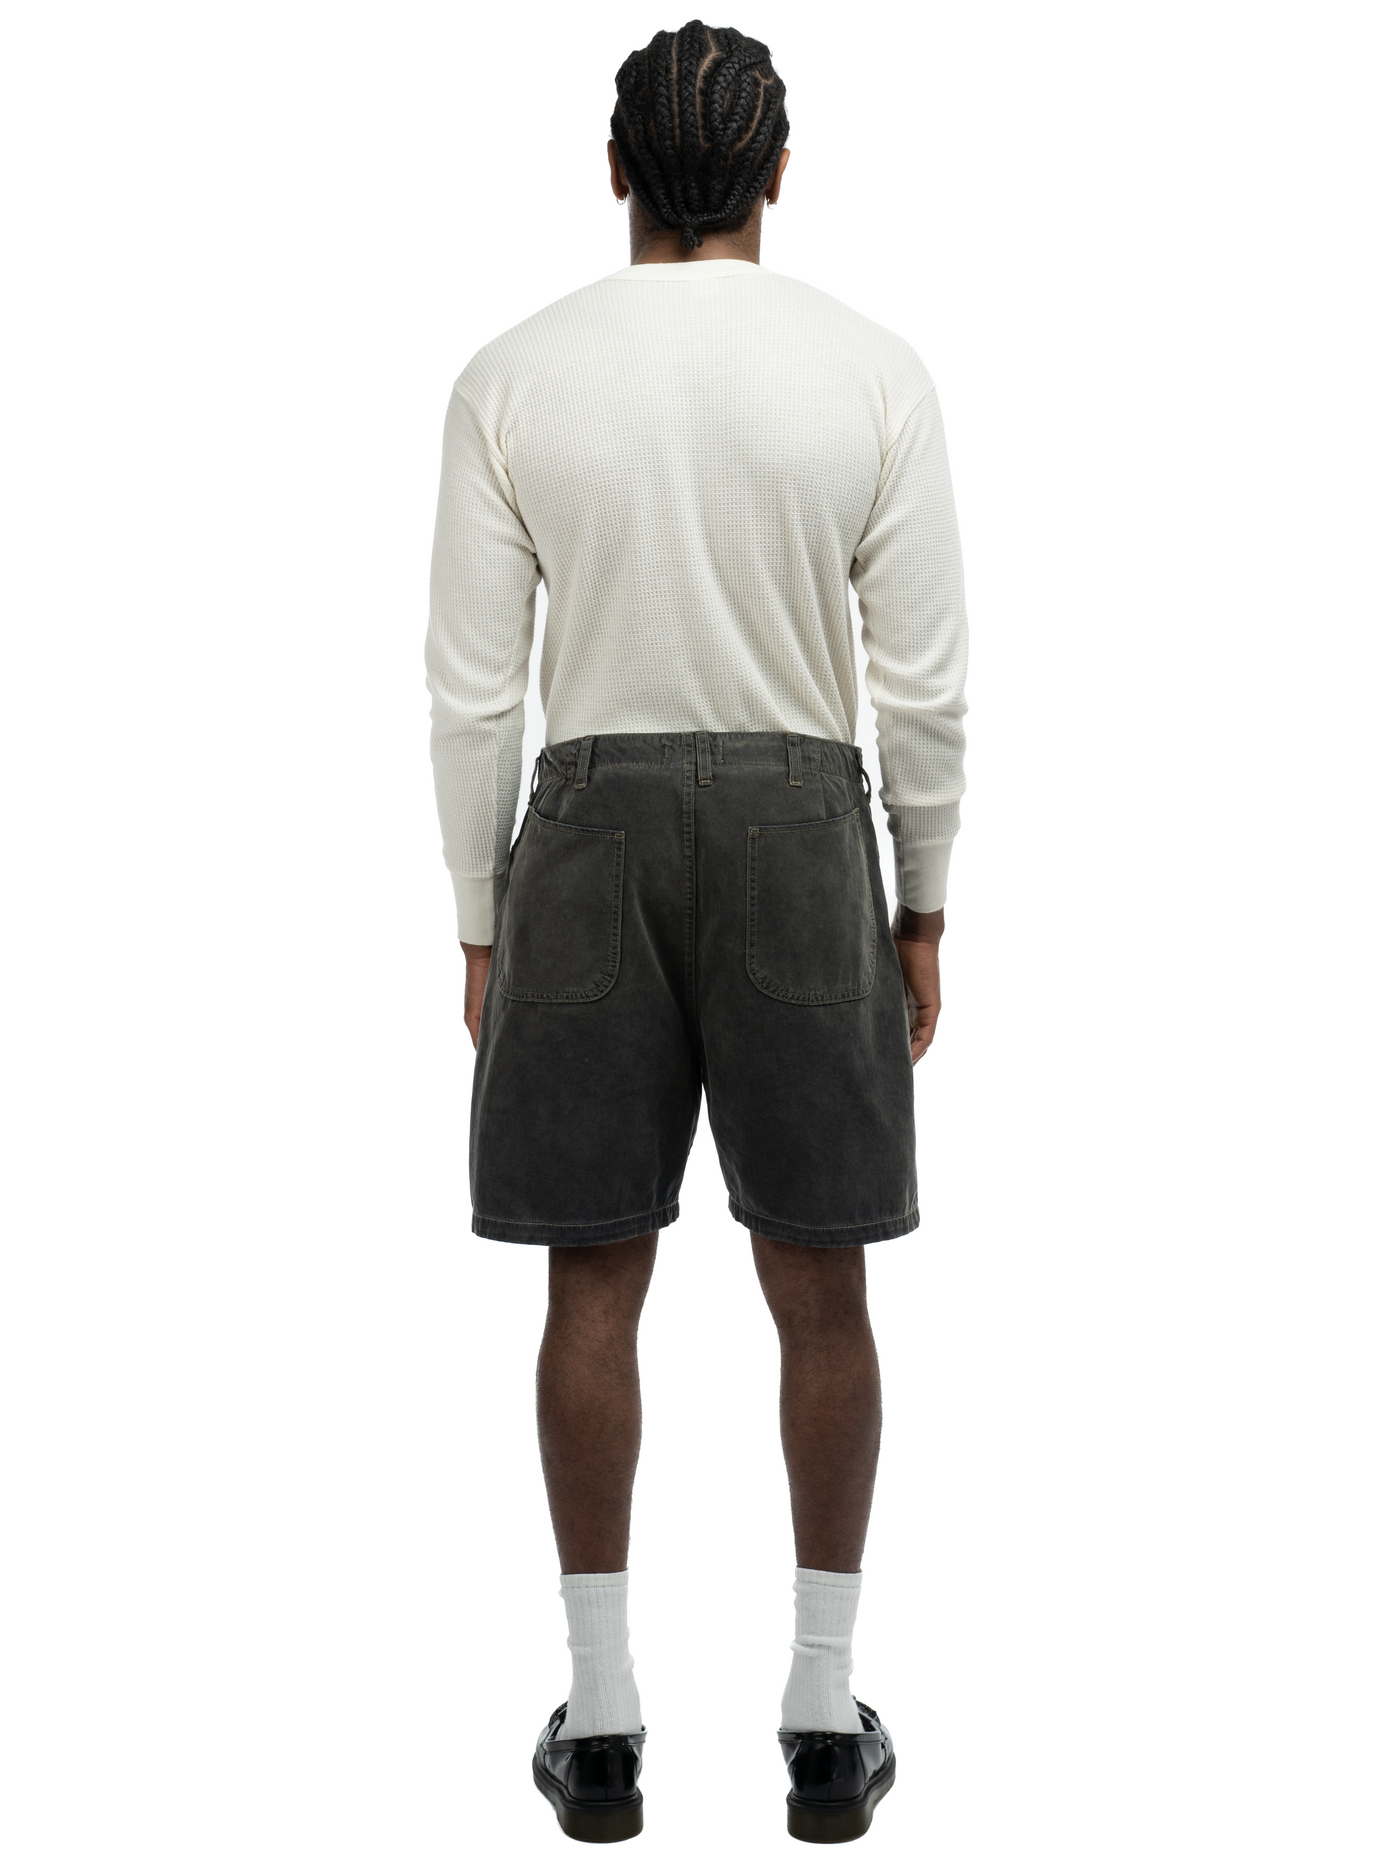 Overdyed Herringbone Shorts